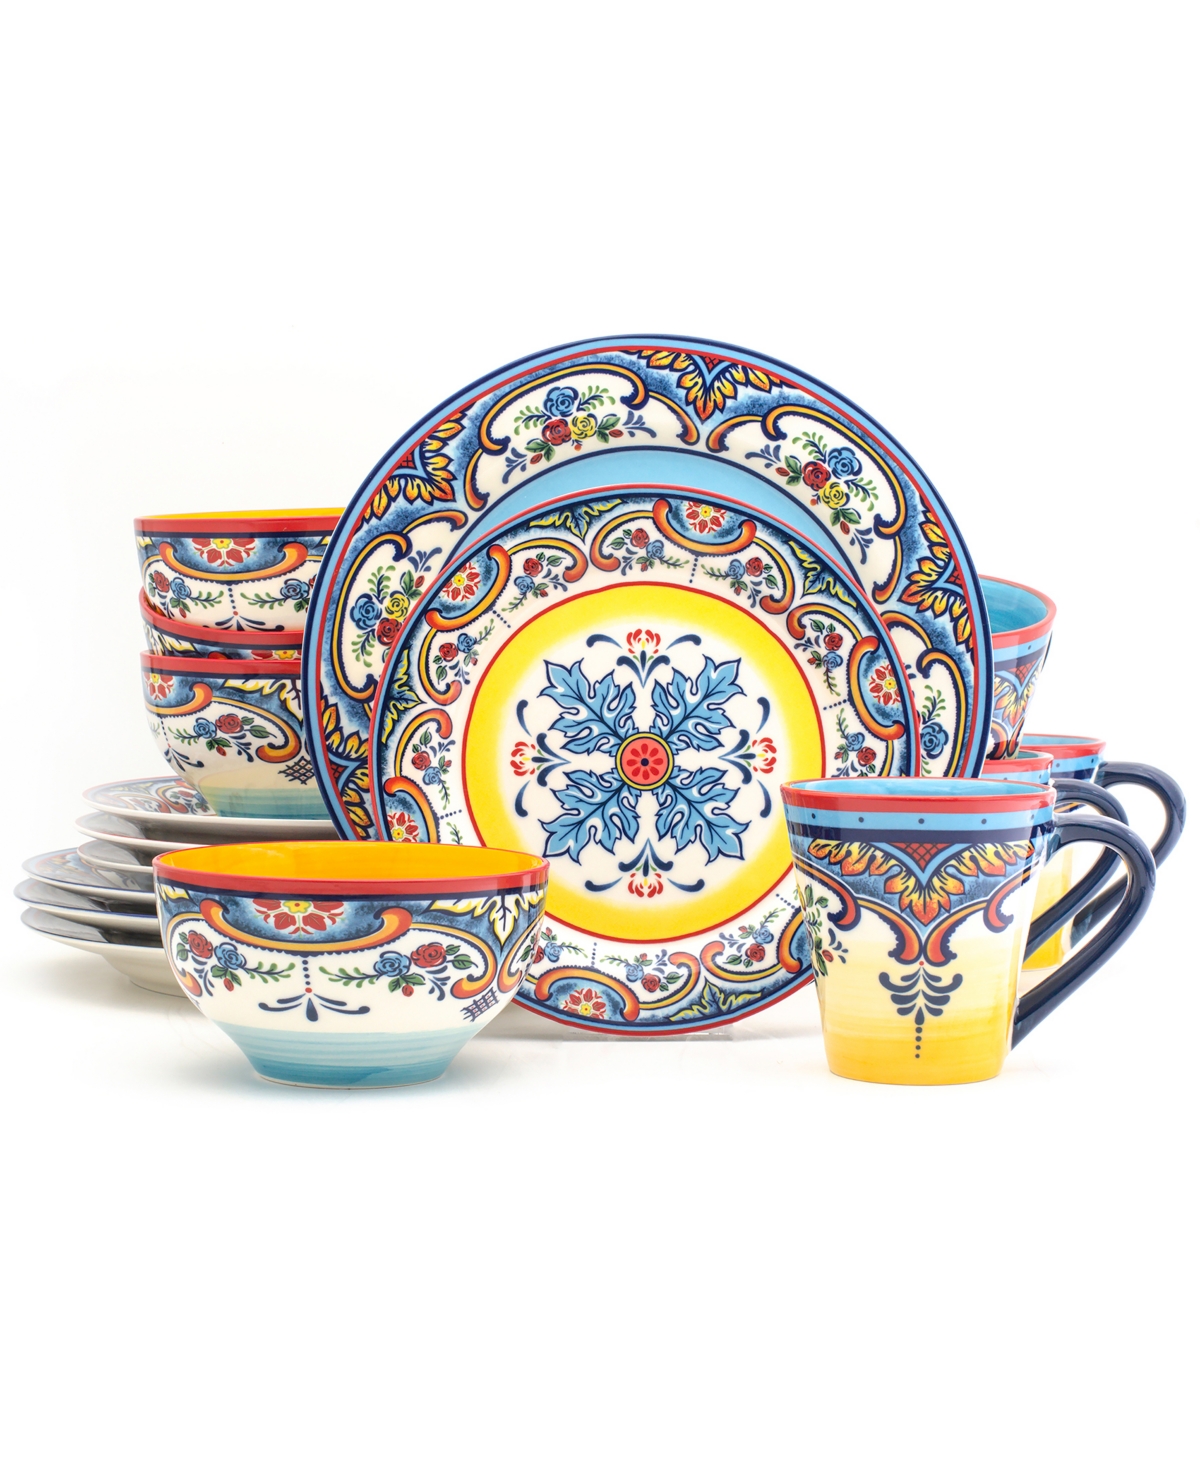 Zanzibar 16 Piece Stoneware Dinnerware Set - Multicolor